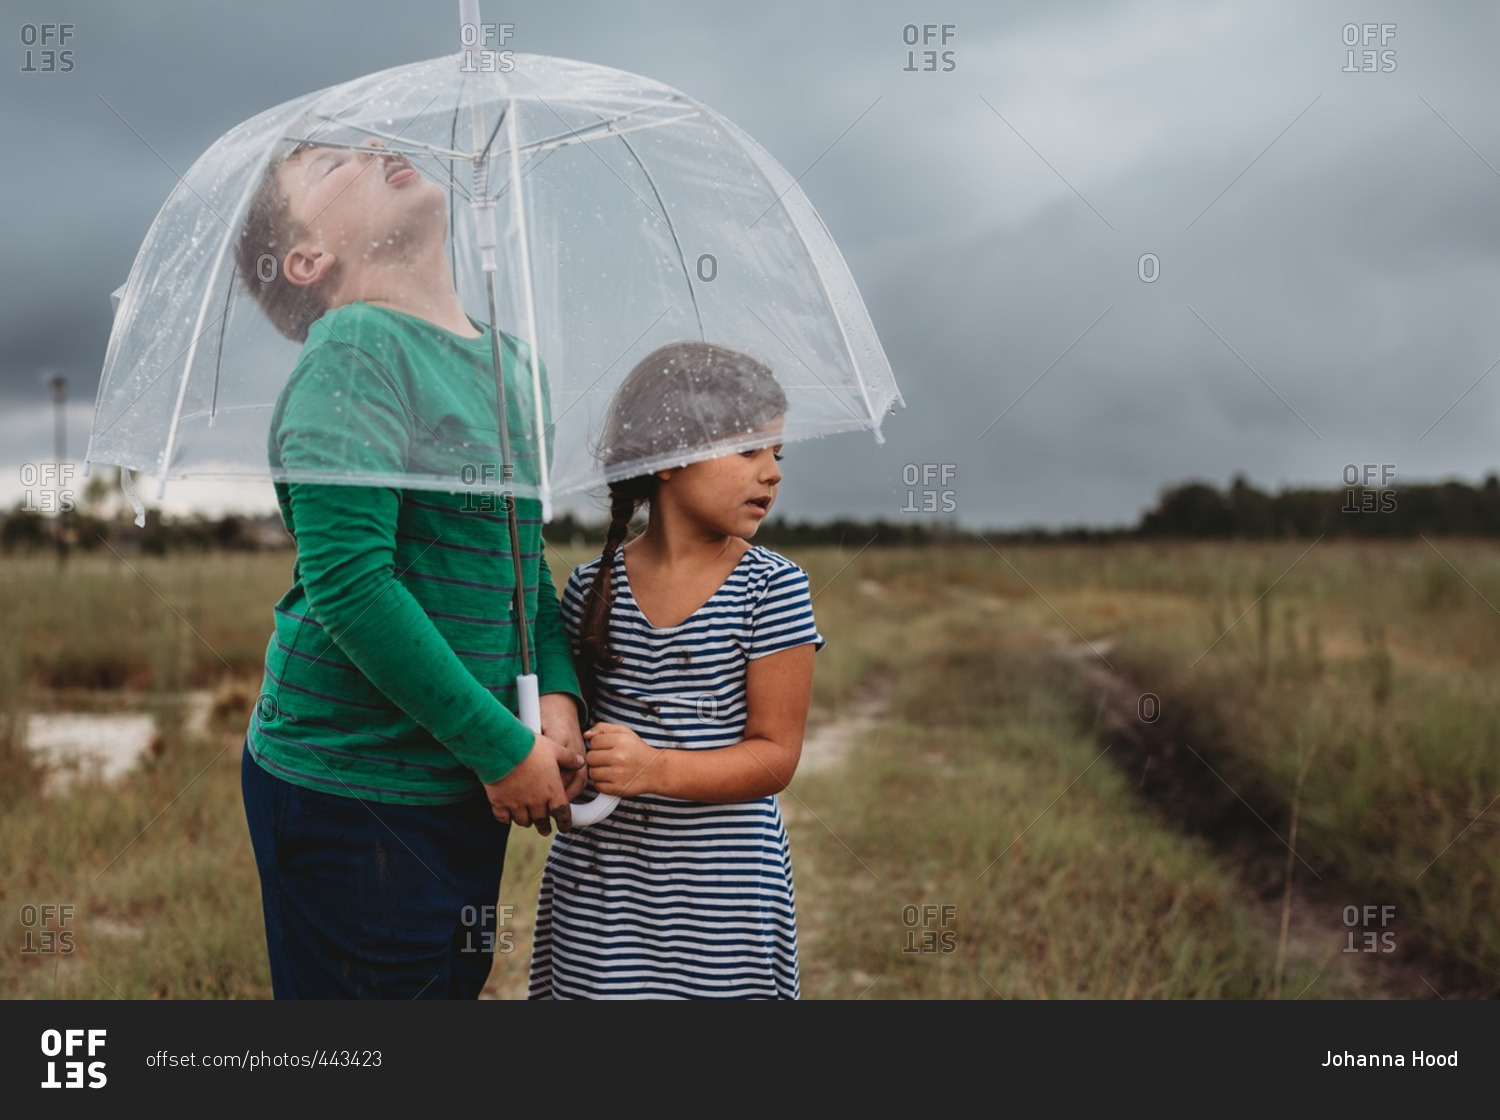 Children standing under a clear umbrella in the rain